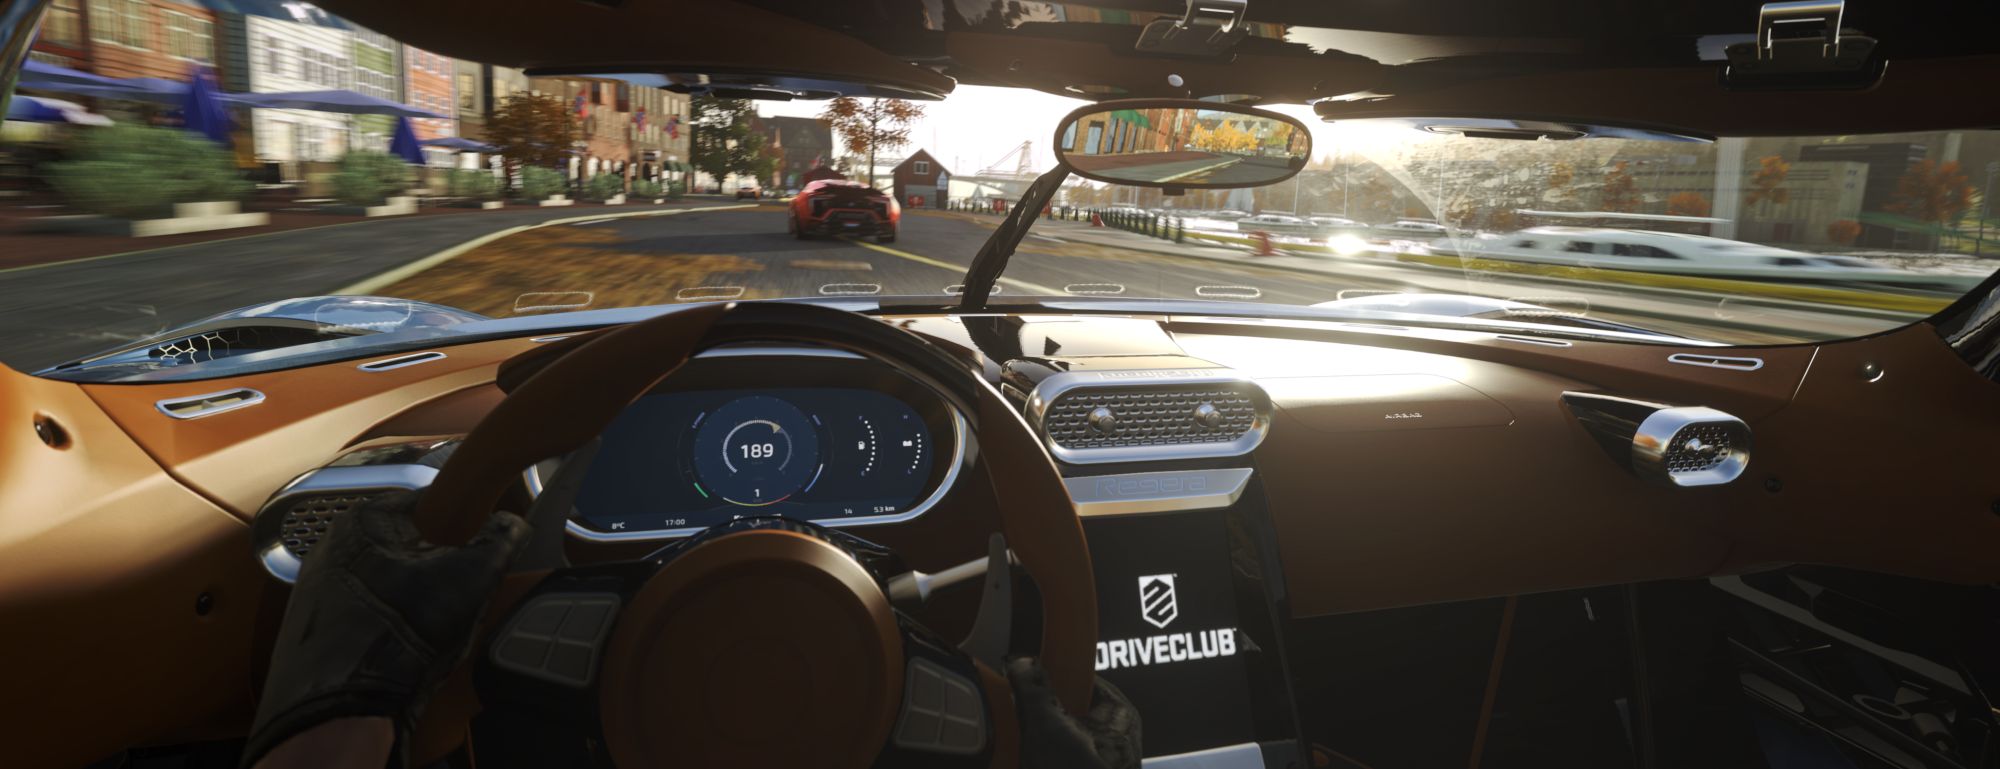 Driveclub VR PlayStation VR